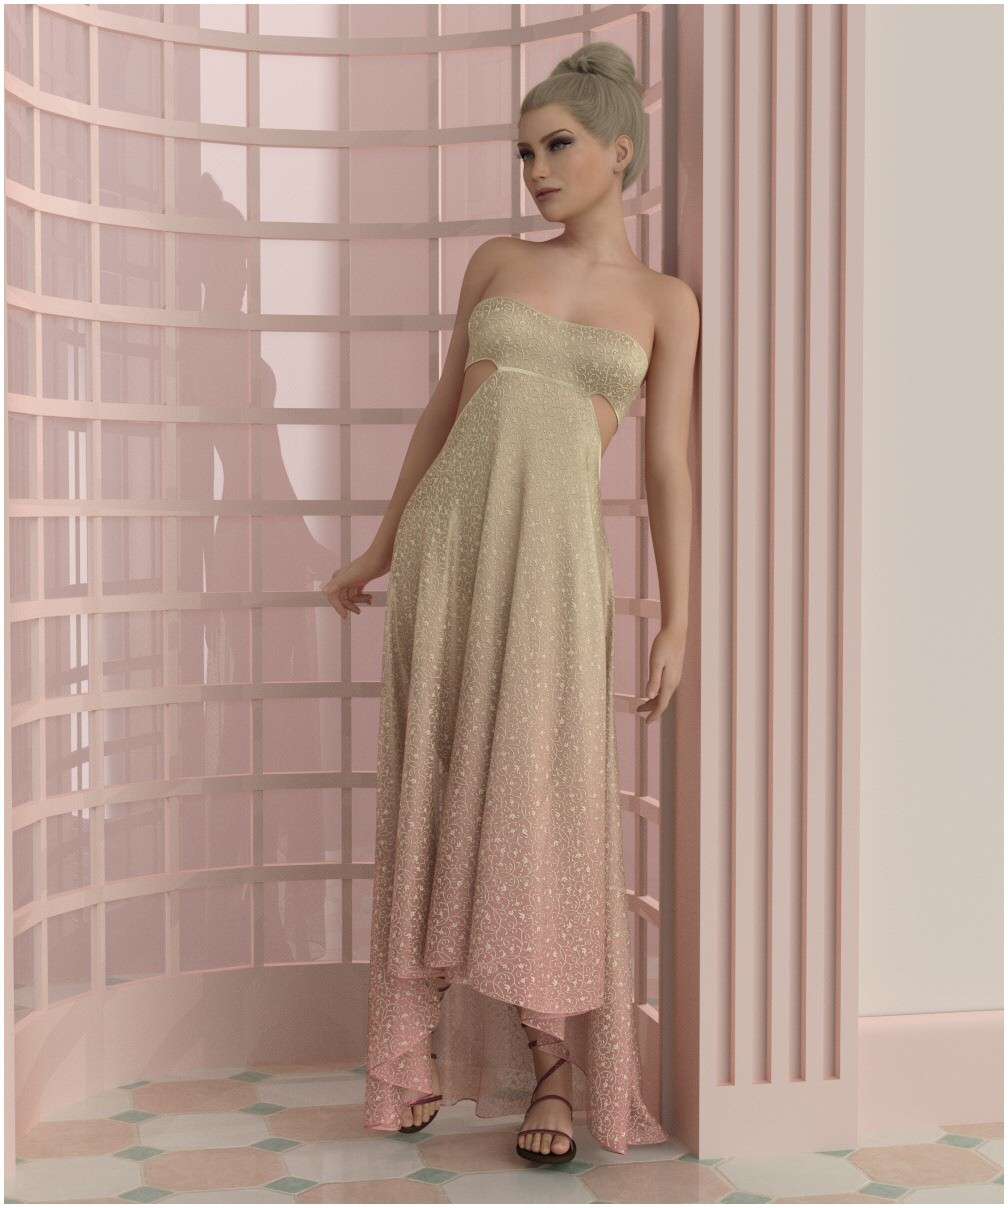 dForce - Peep Back Dress for G8Fs by: Lully, 3D Models by Daz 3D